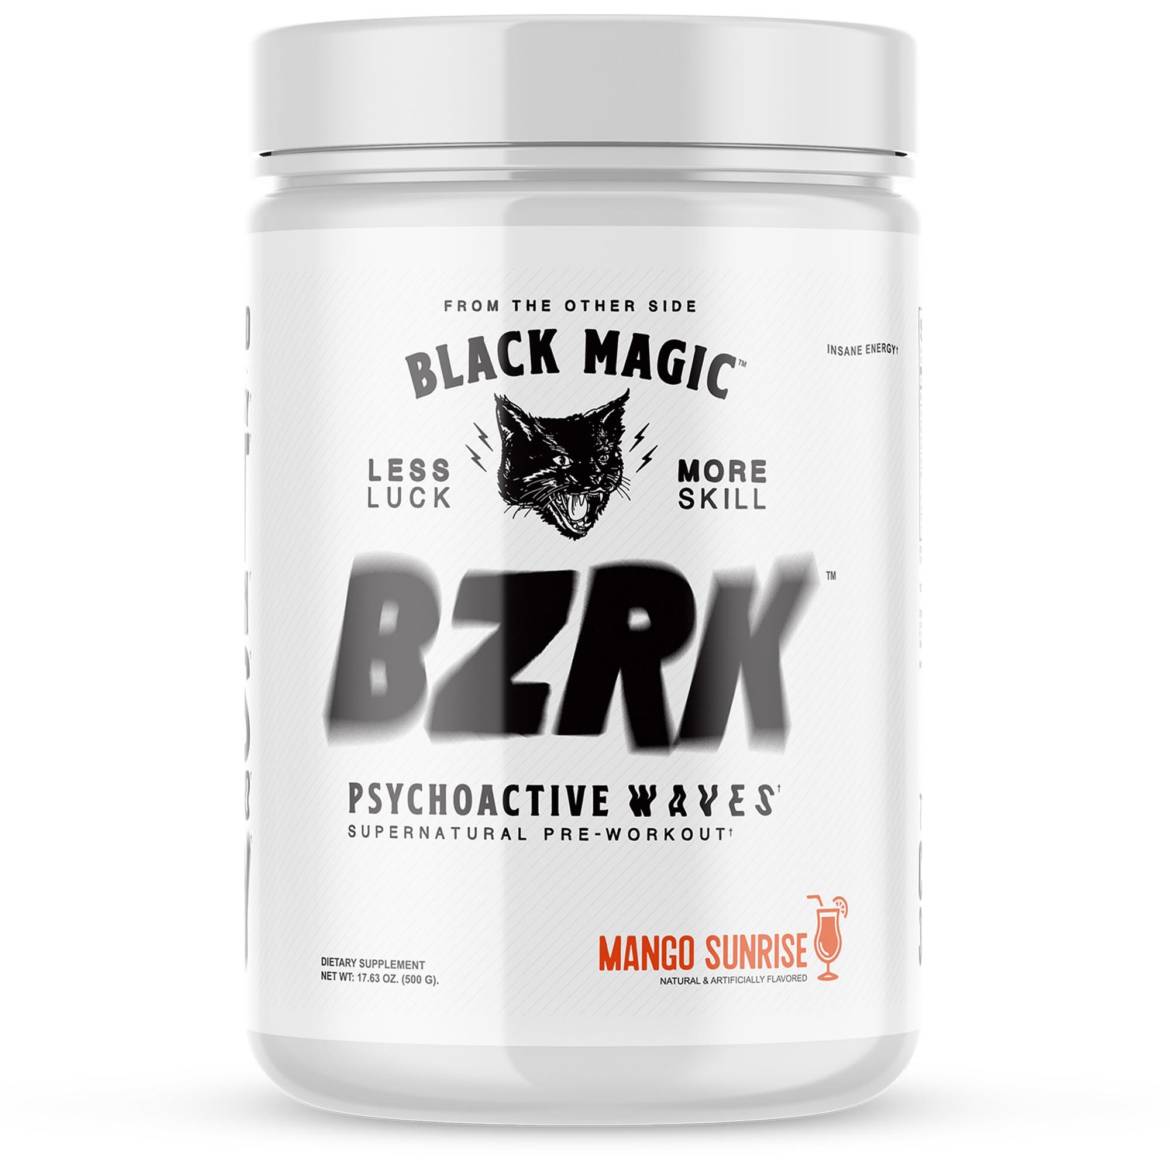 Black_Magic_Product_Renders-BZRK-Mango_2000x.jpg